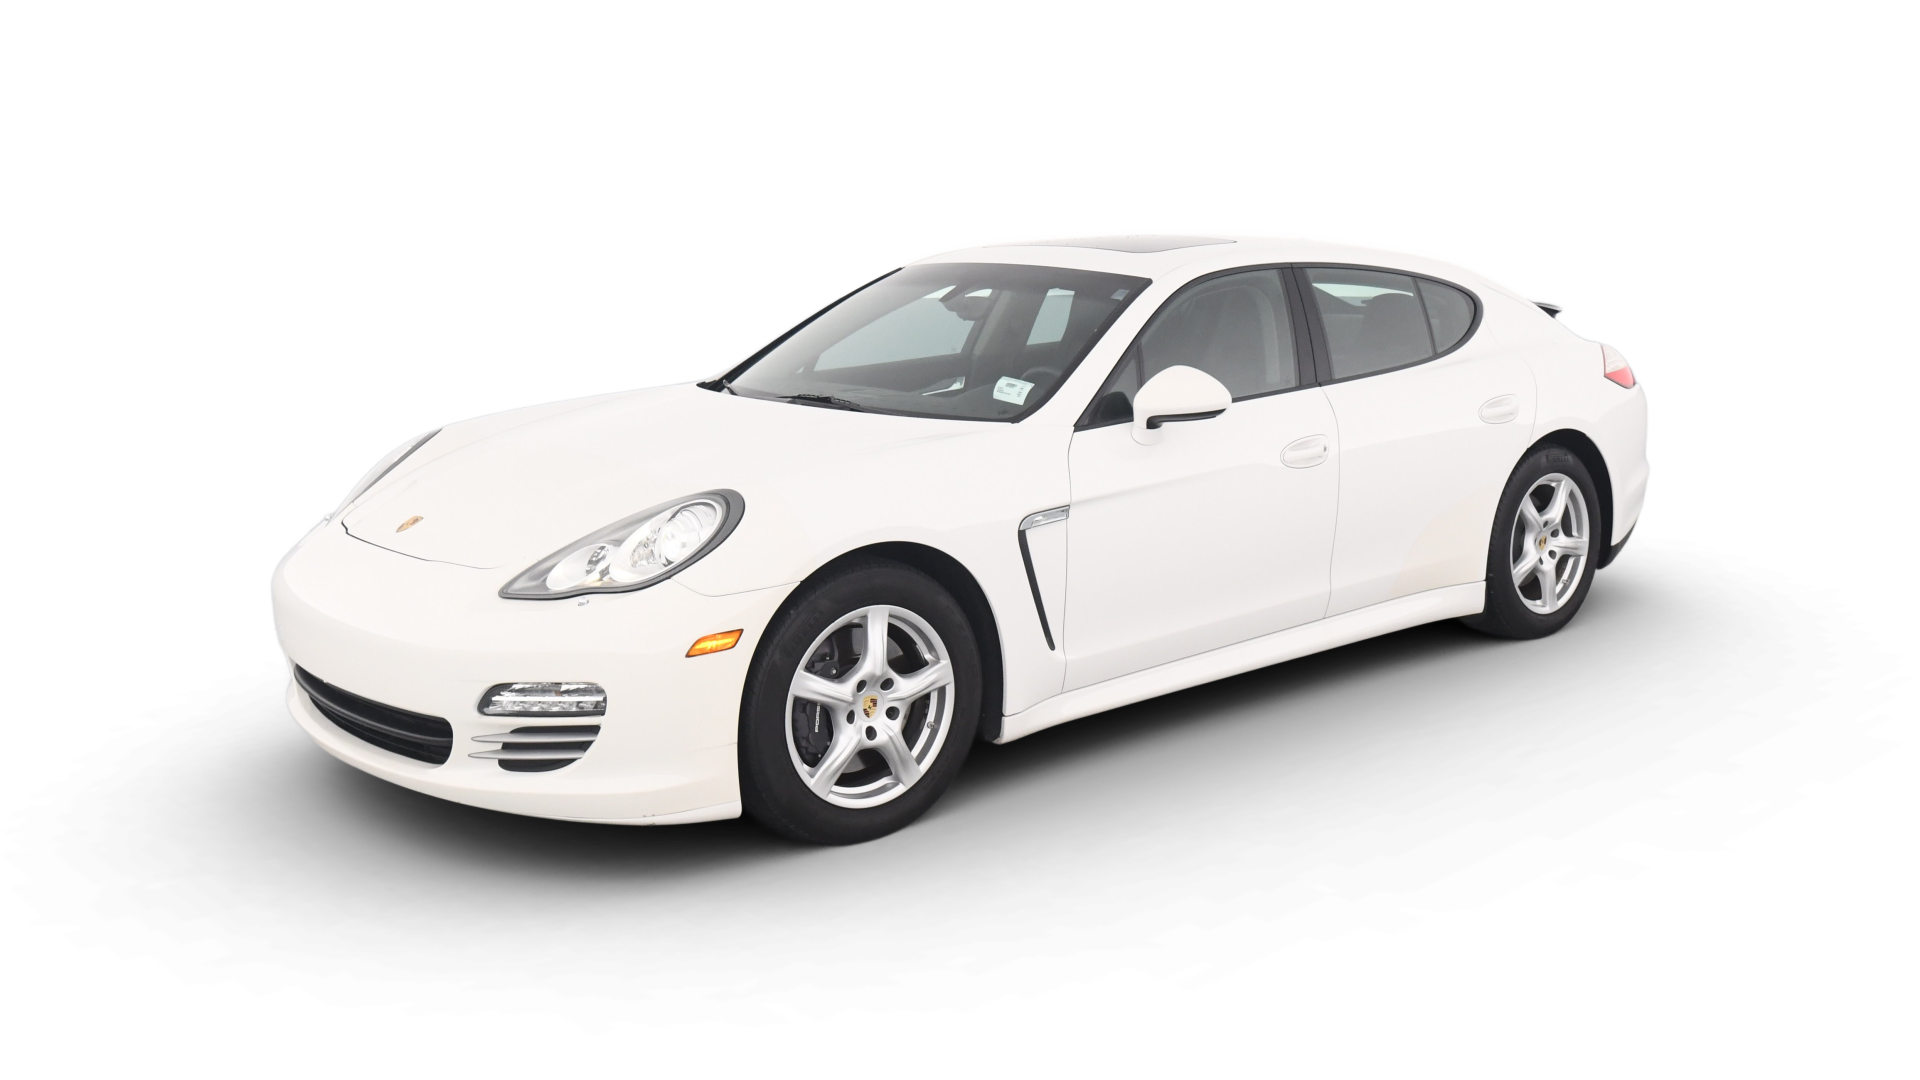 Porsche Panamera model image.